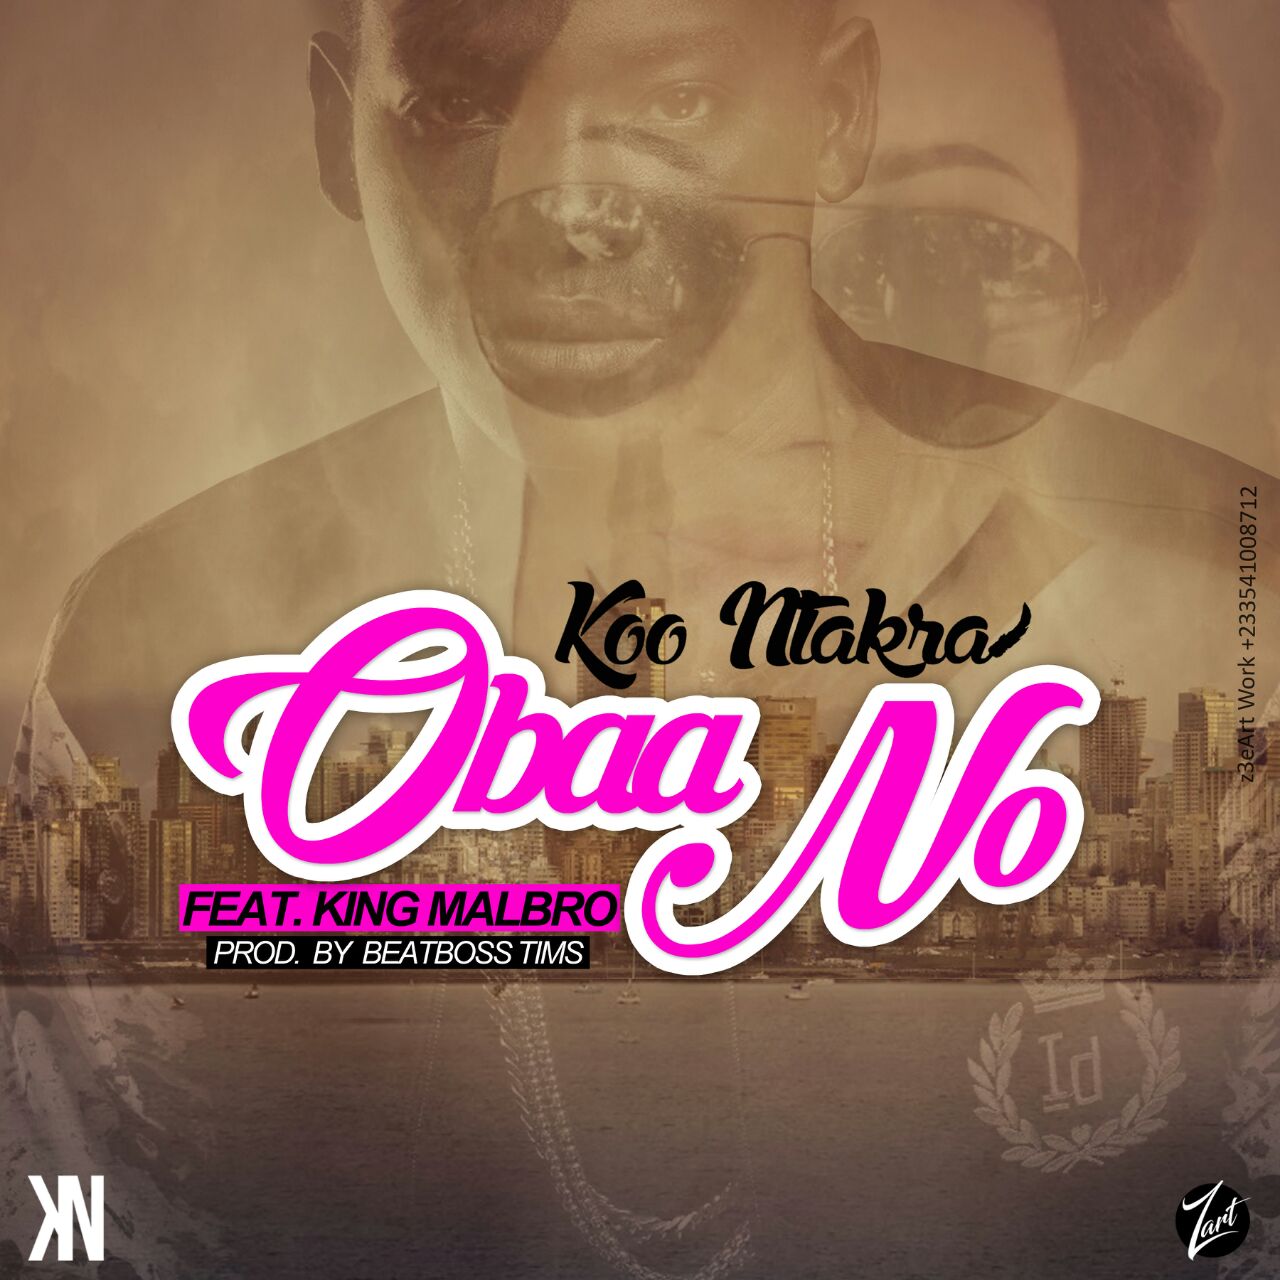 Koo Ntakra – Obaa no (Prod by BeatBoss Tims)